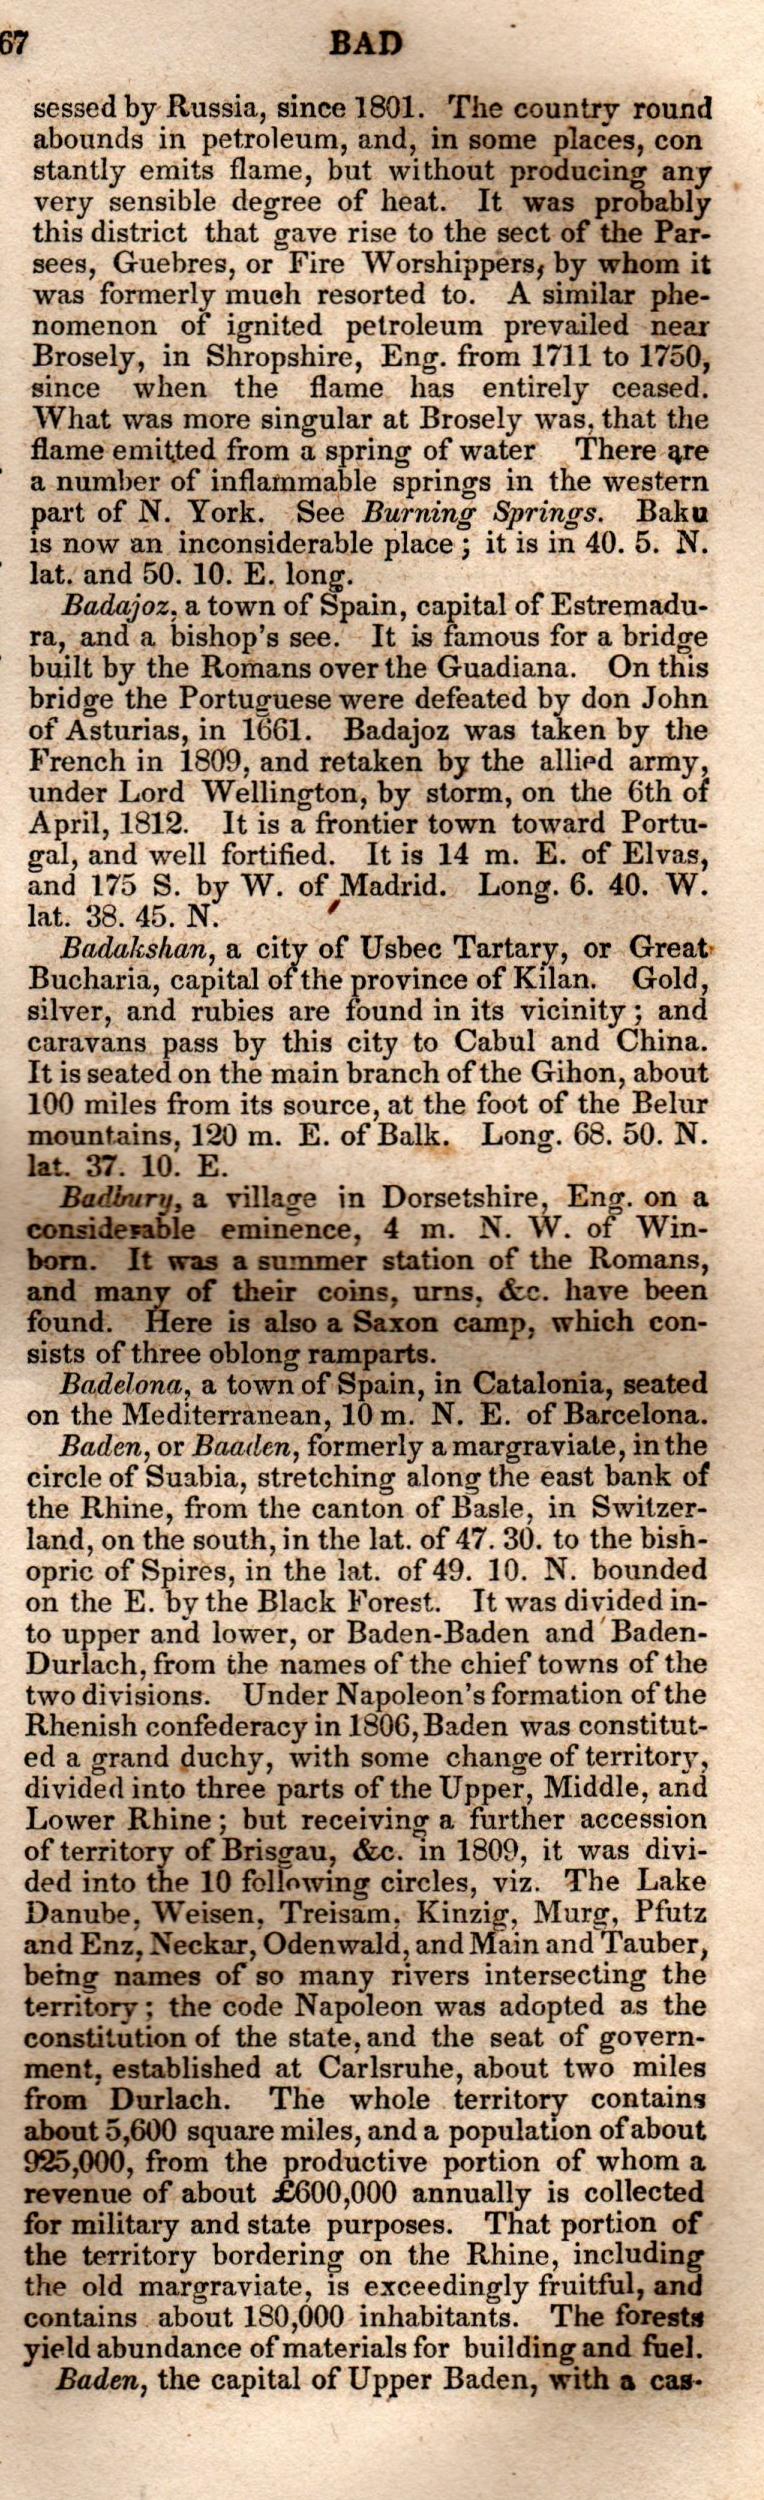 Brookes’ Universal Gazetteer (1850), Page 67 Right Column